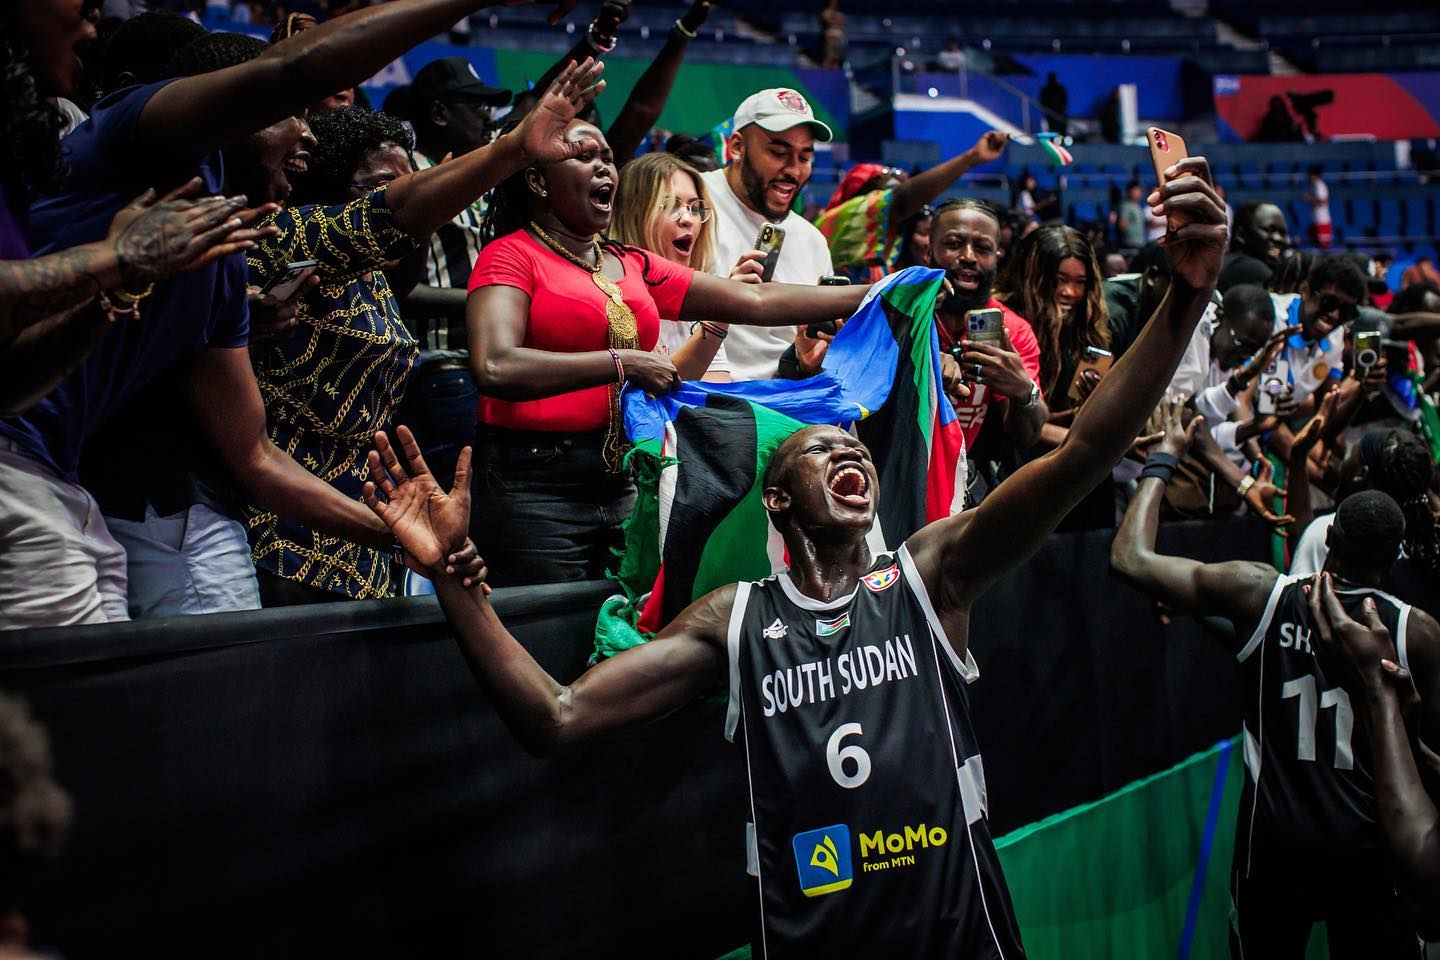 Chinese embassy congratulates South Sudan on basketball win